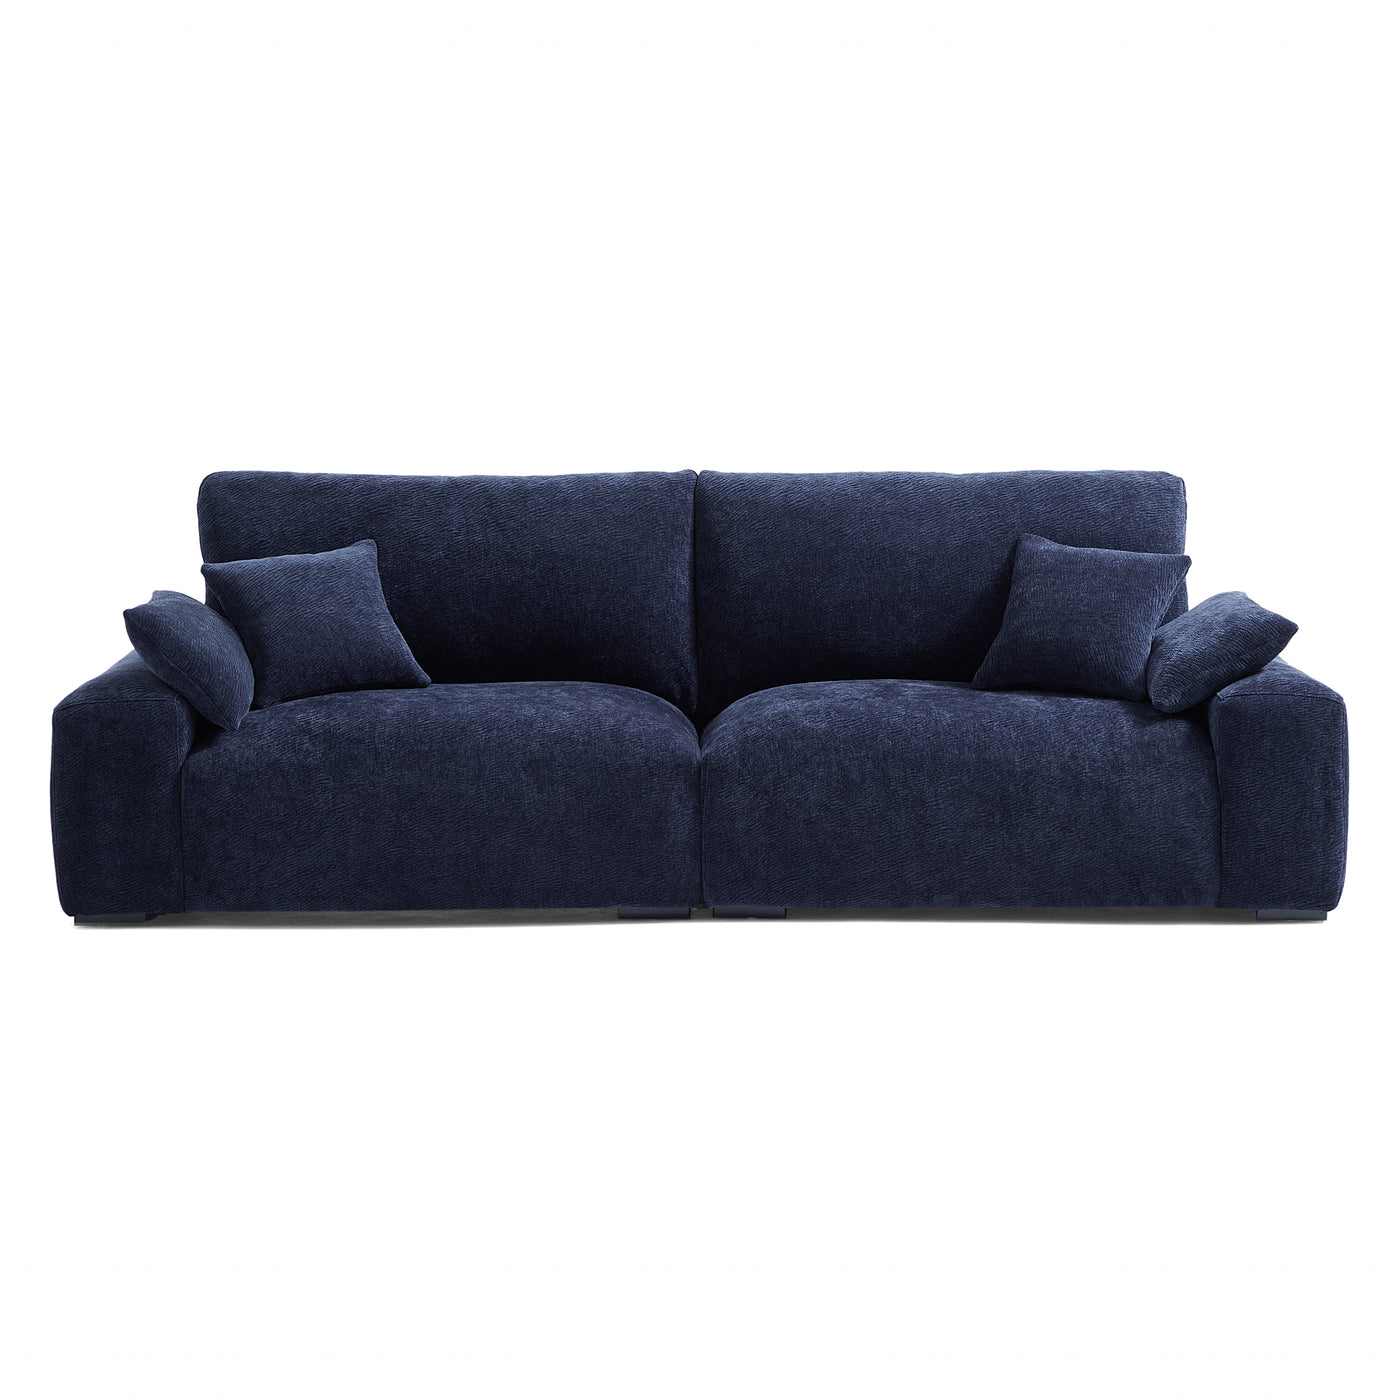 The Empress Navy Blue Sofa Set-Navy Blue-106.3"